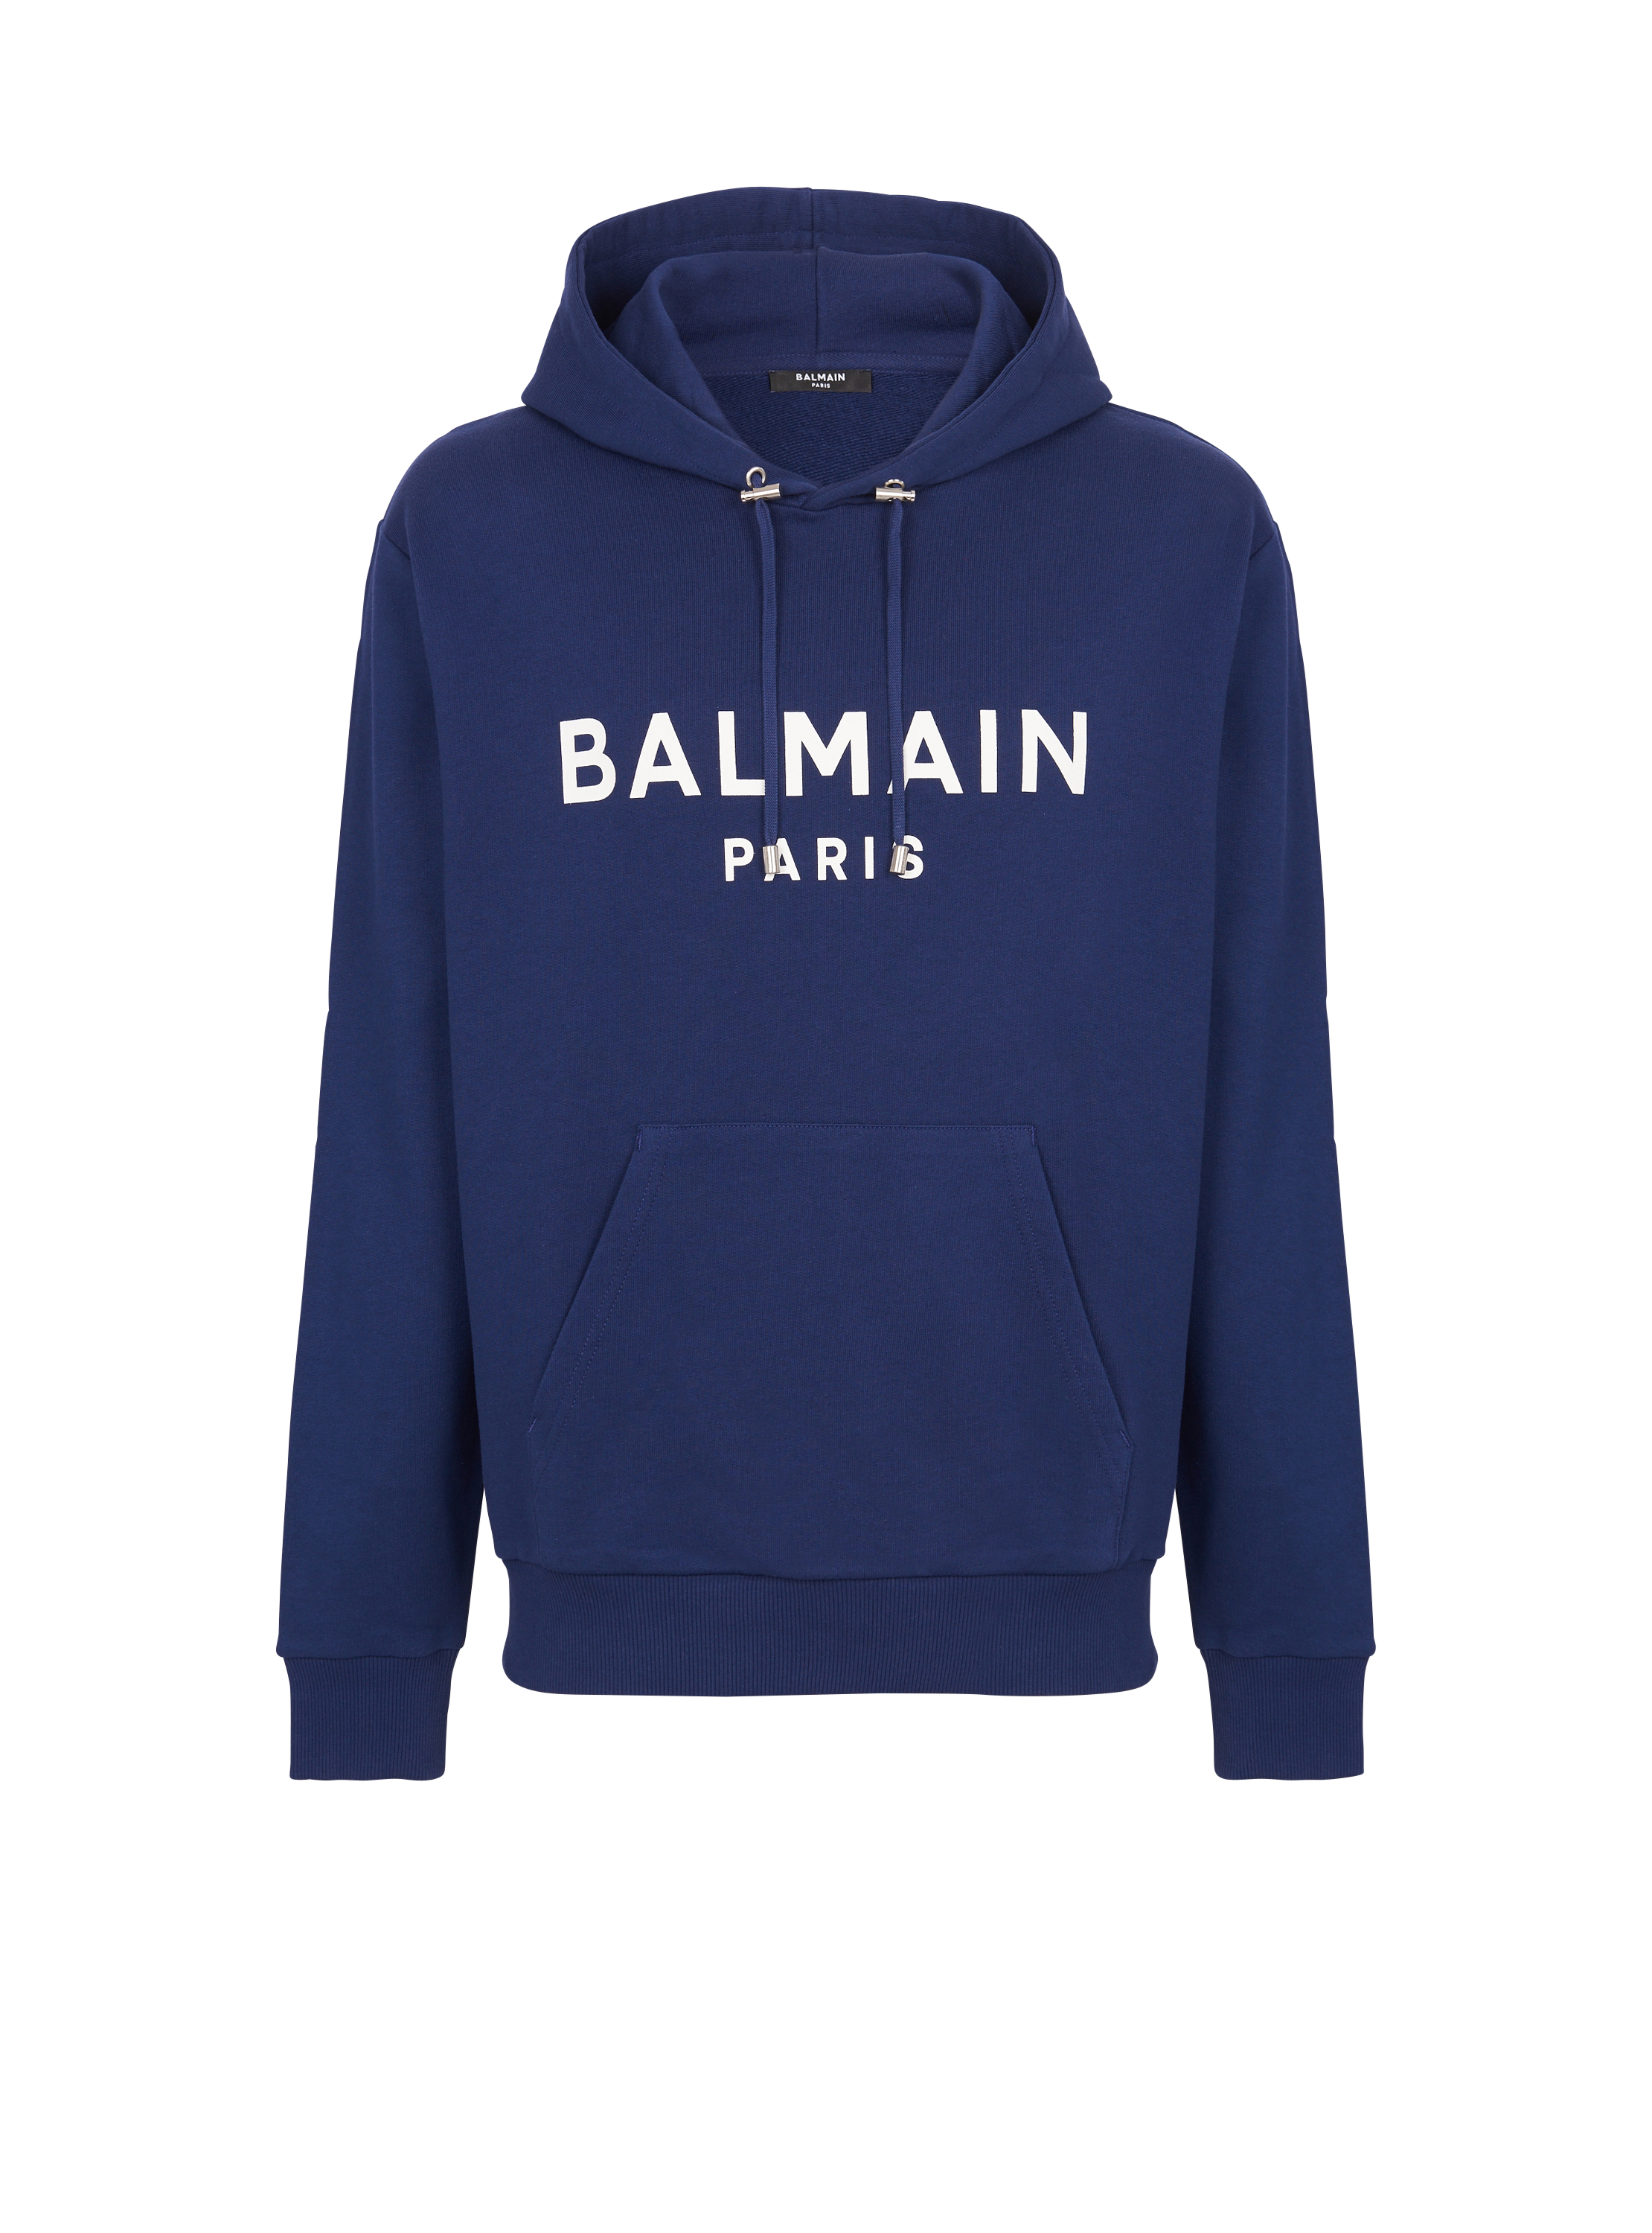 Balmain Paris sweatshirt navy Men | BALMAIN